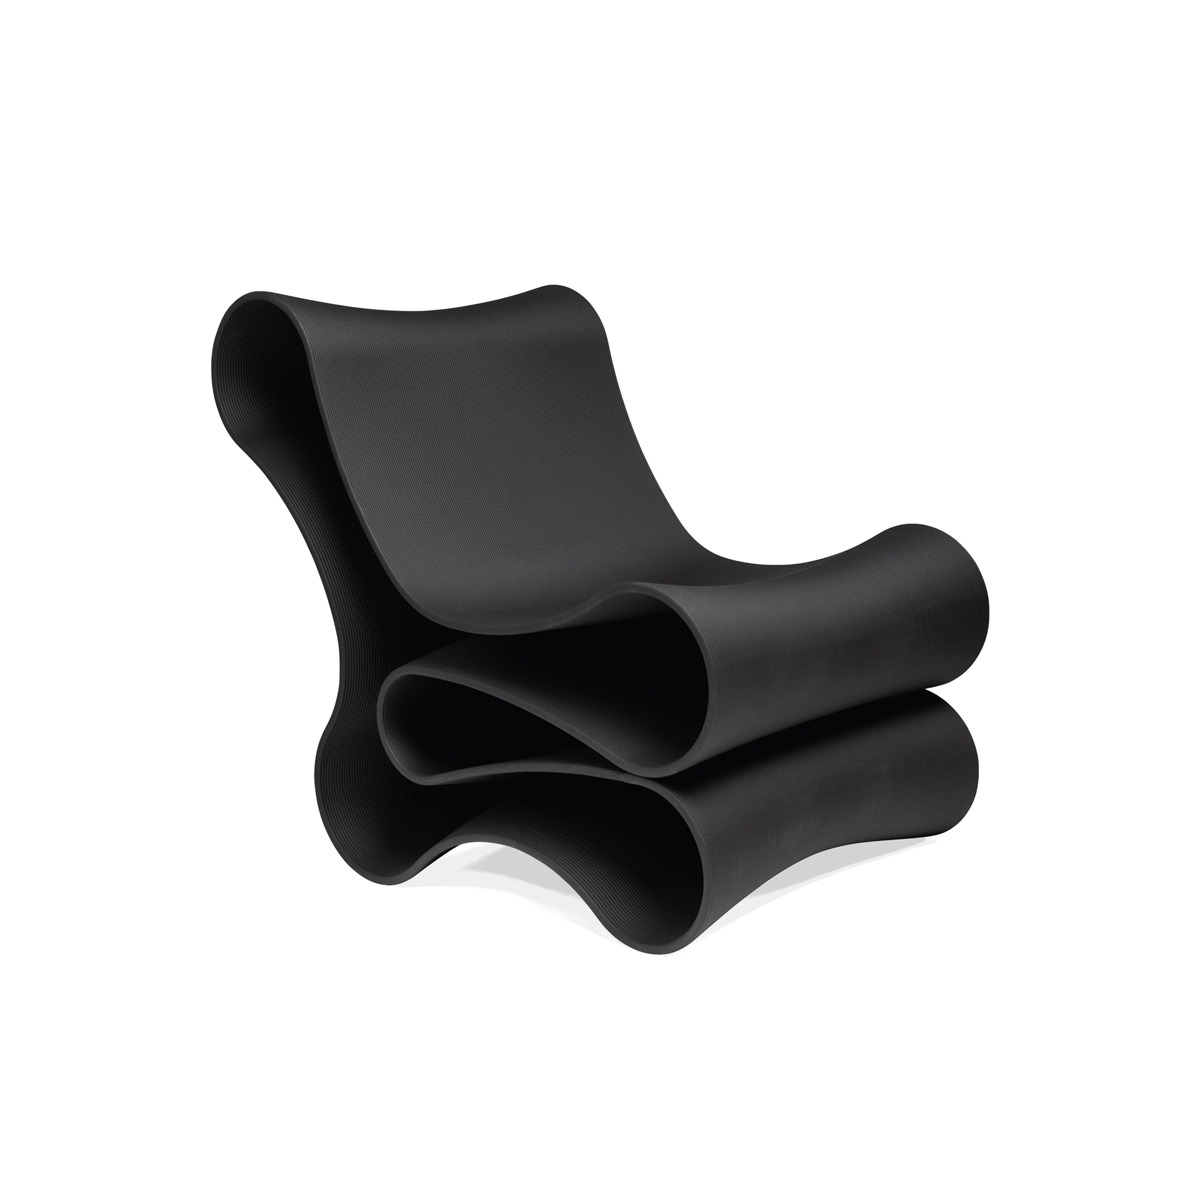 REFORM DESIGN LAB Reform Lounge Chair - Black